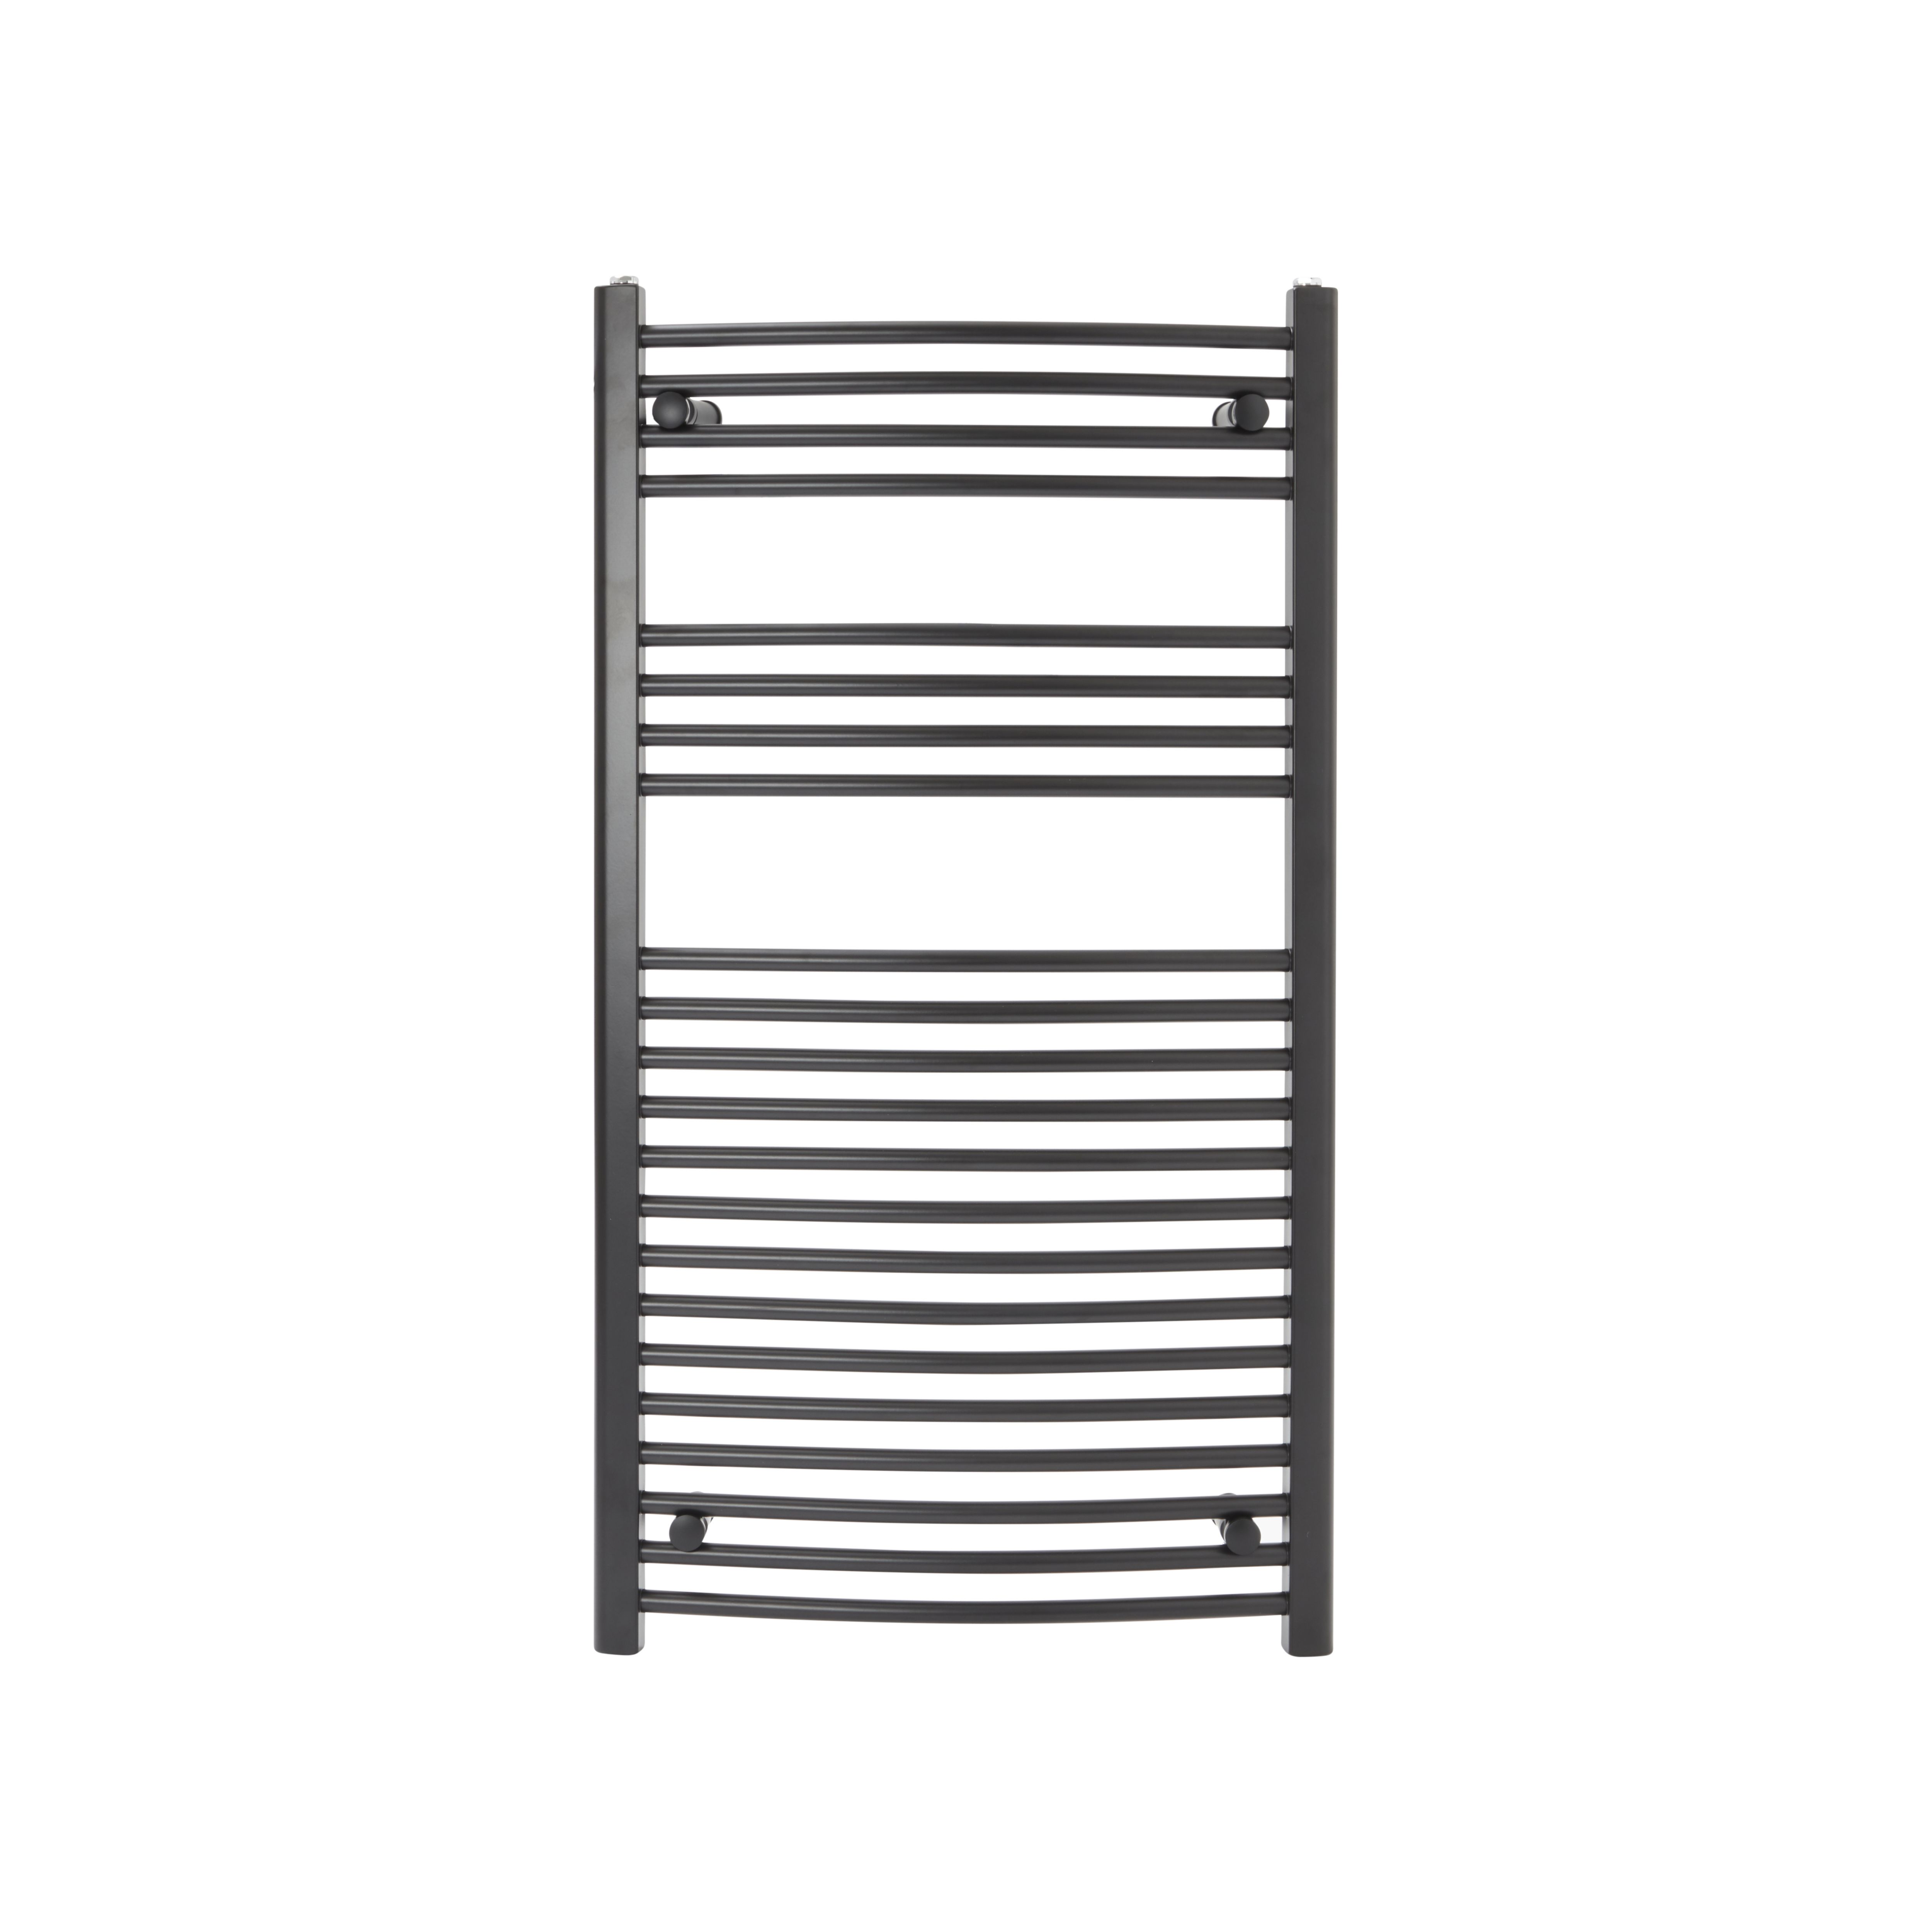 Flomasta, Black Vertical Curved Towel radiator (W)600mm x (H)1100mm